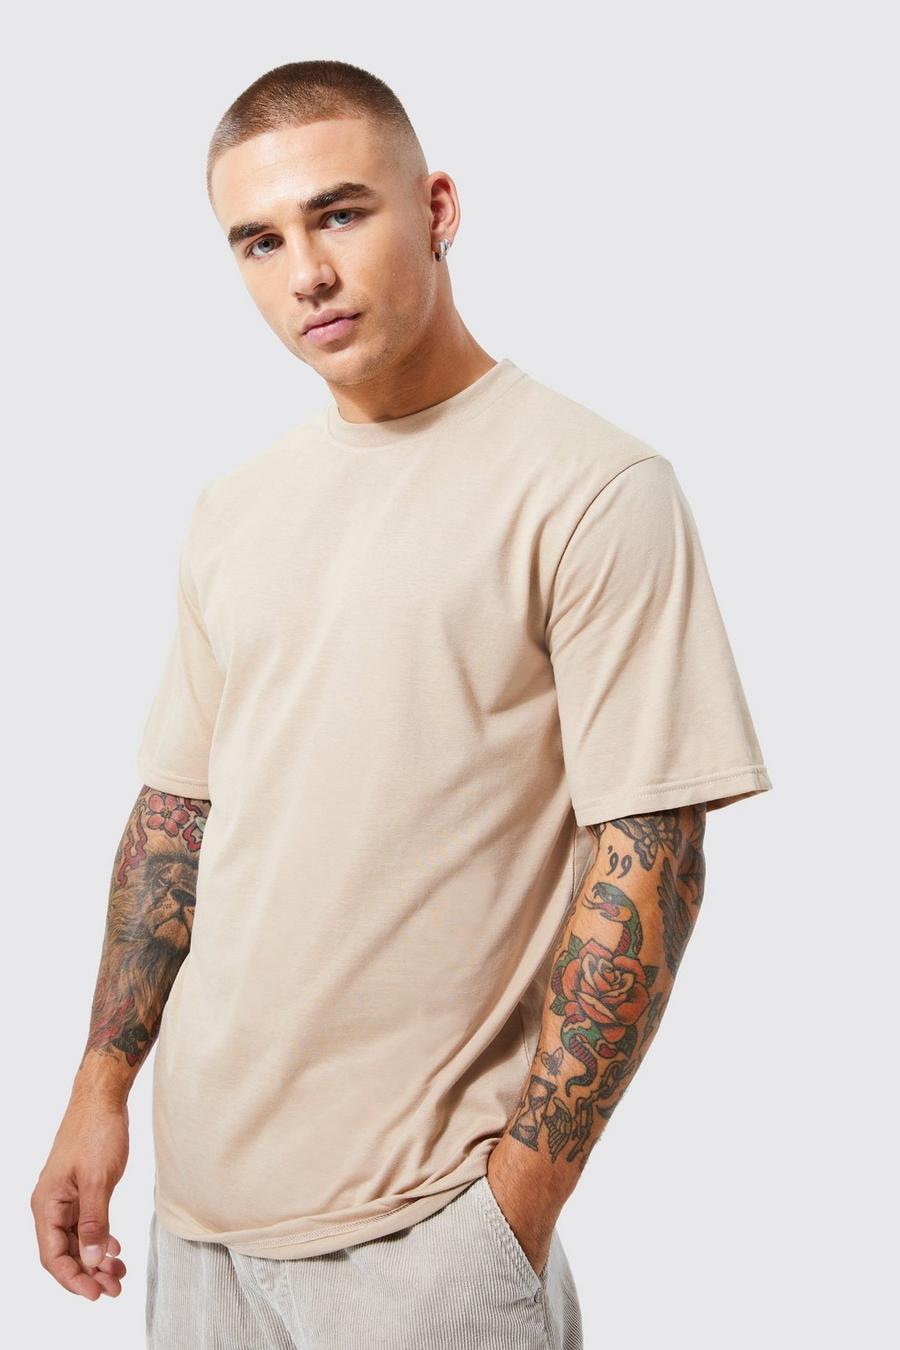 ASOS DESIGN oversized T-shirt in off-white with tattoo skull back print